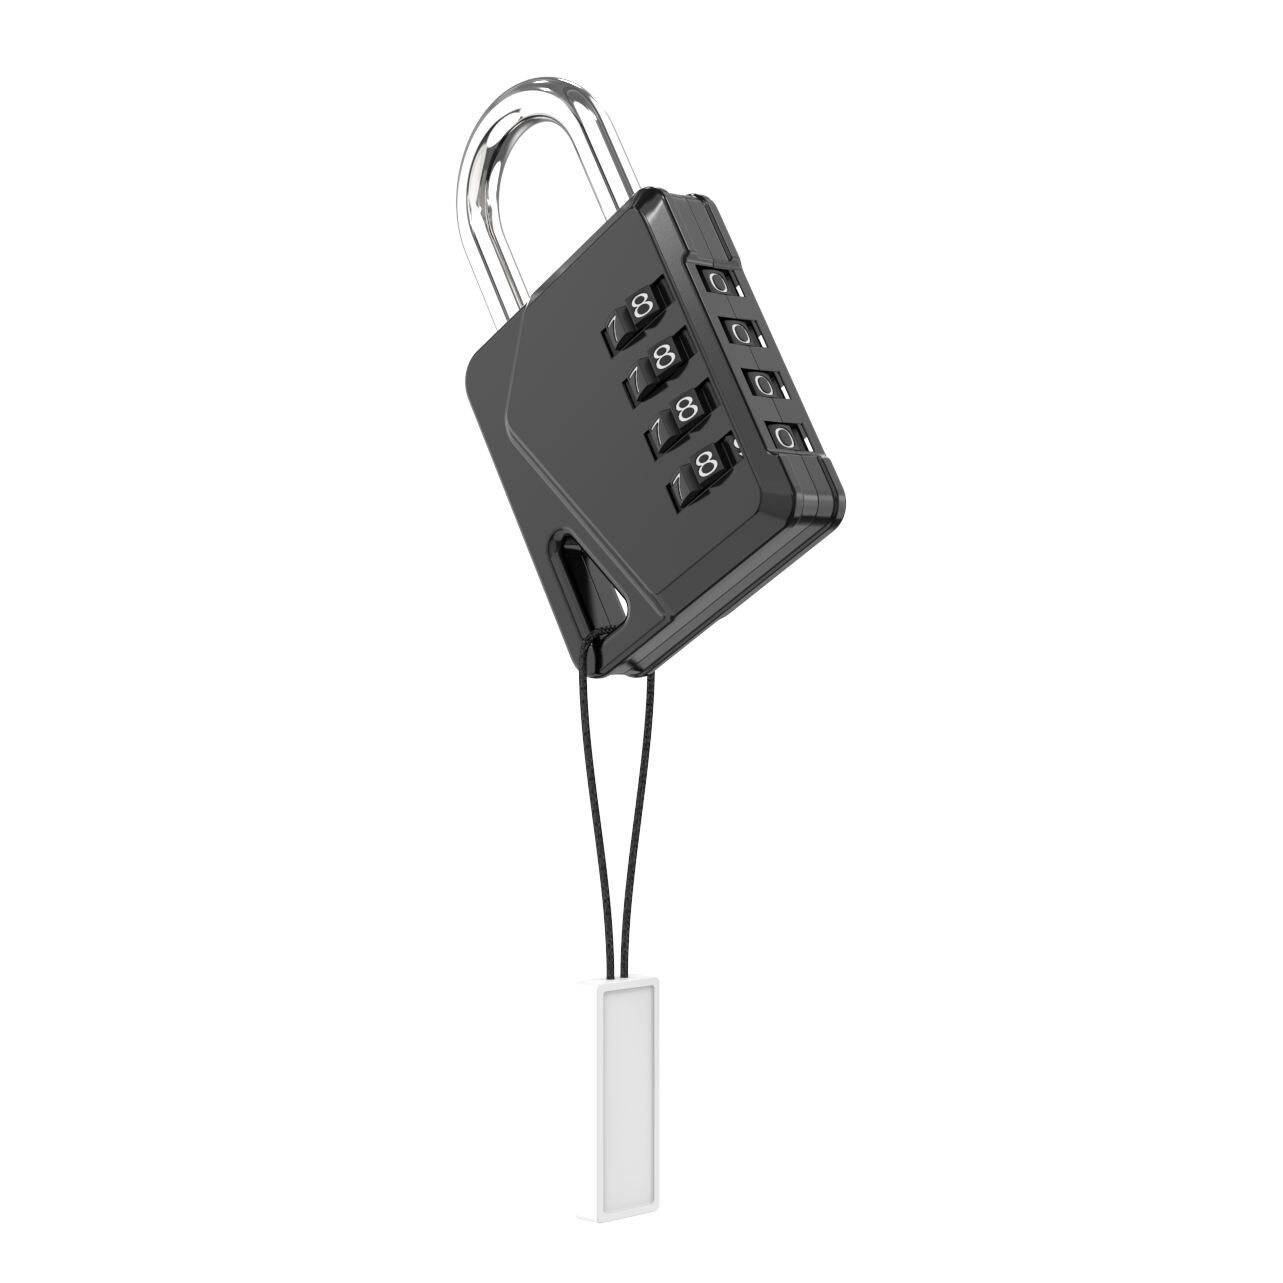 Combination Cam Lock Security Locks Drawer Combination Lock Zinc Alloy Password Coded Lock 3-Digit Password Security Padlock for Office Drawer